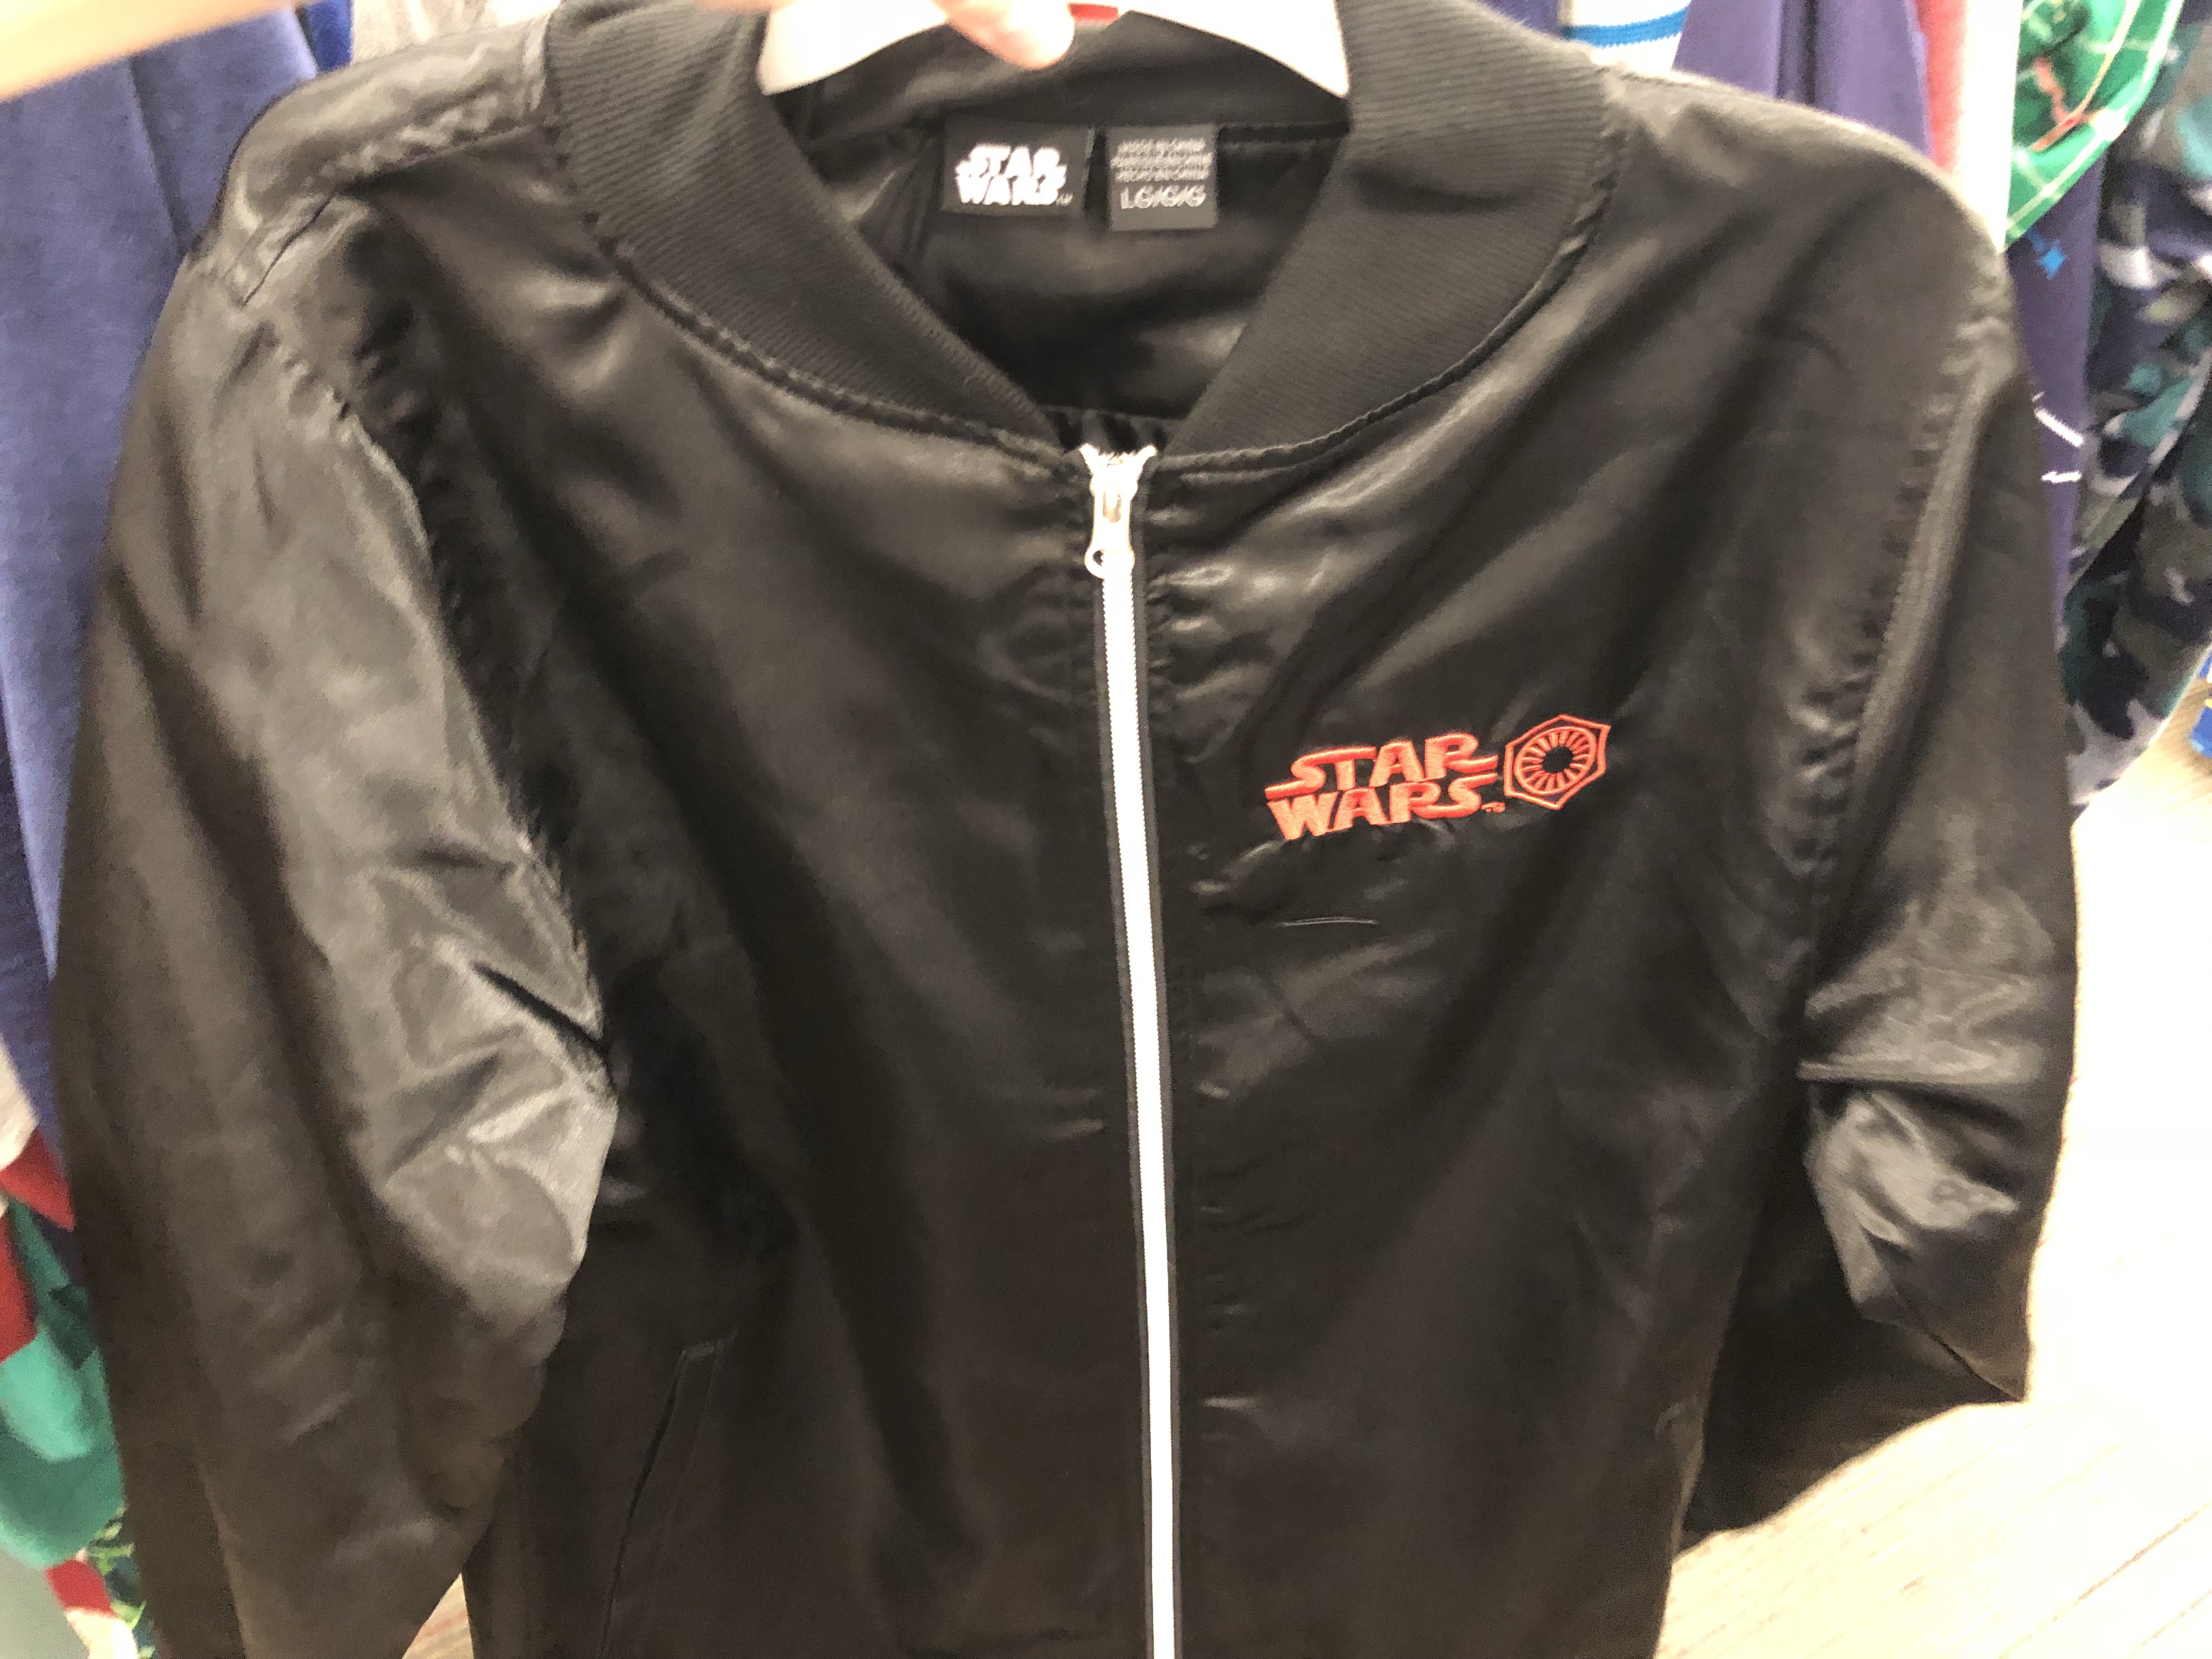 target boys leather jacket